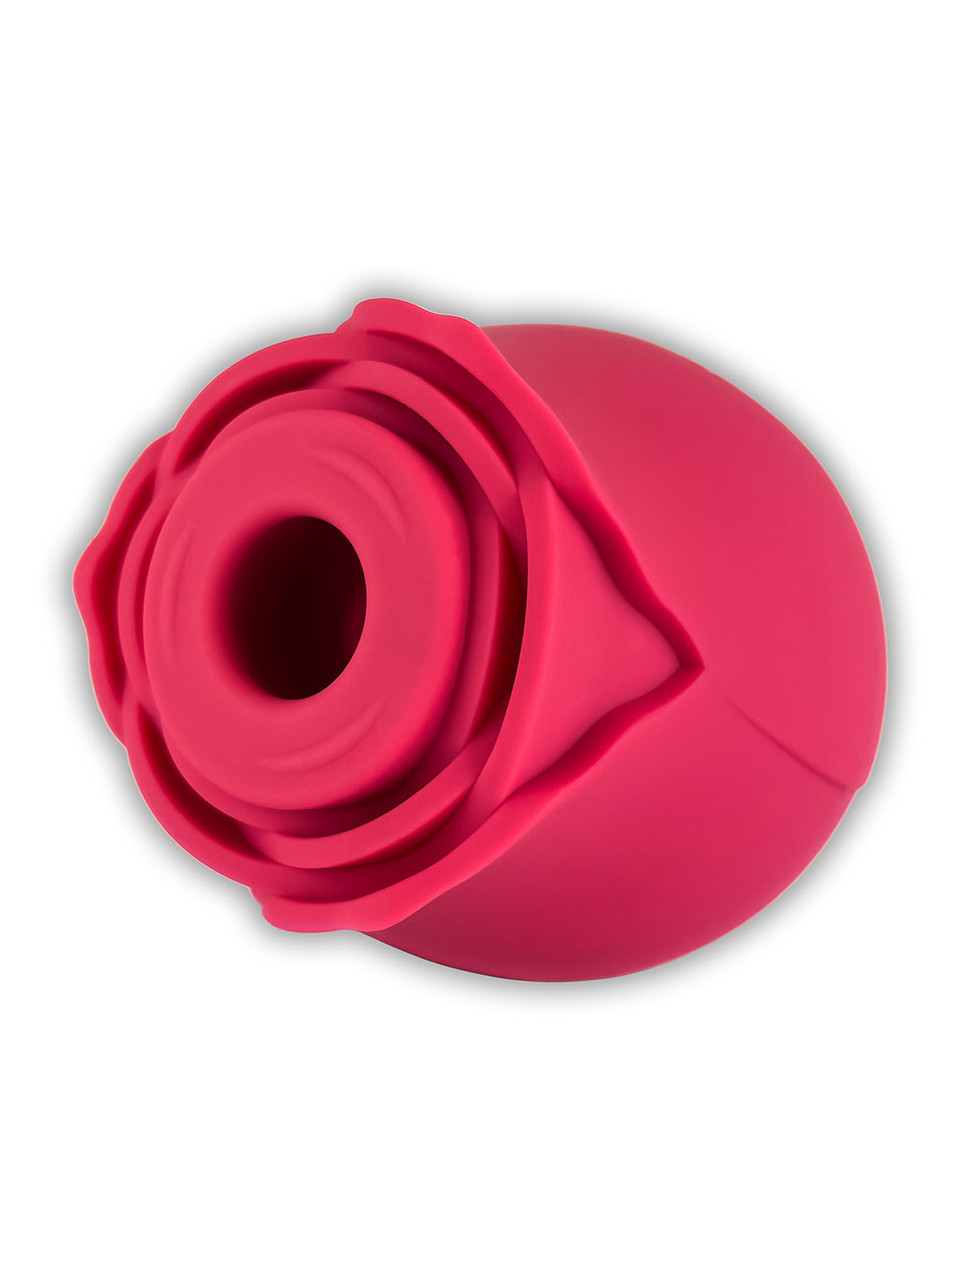 The Rose Handheld Vibrator